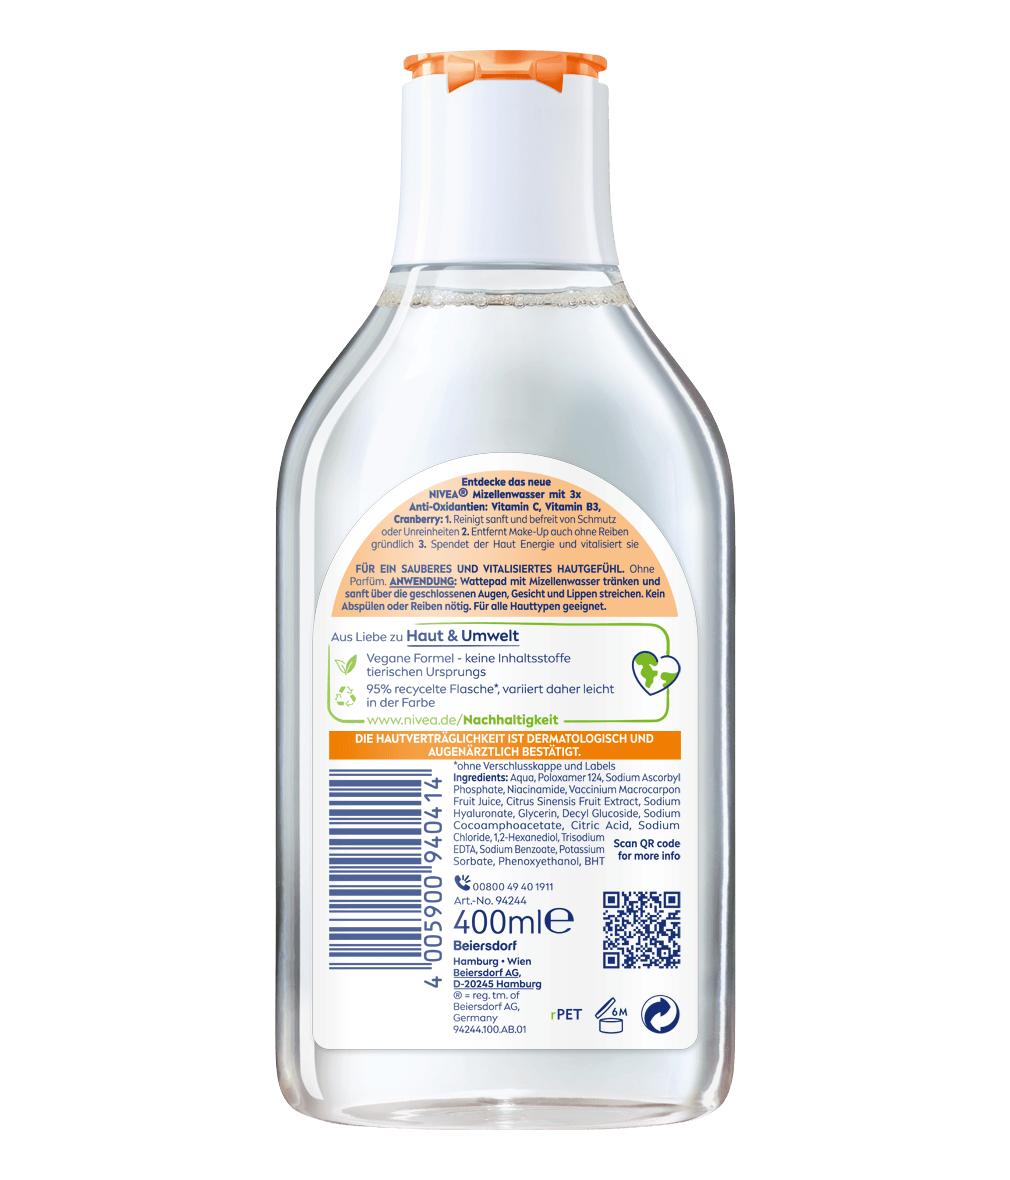 NIVEA Mizellenwasser Vitamin C 400 ml